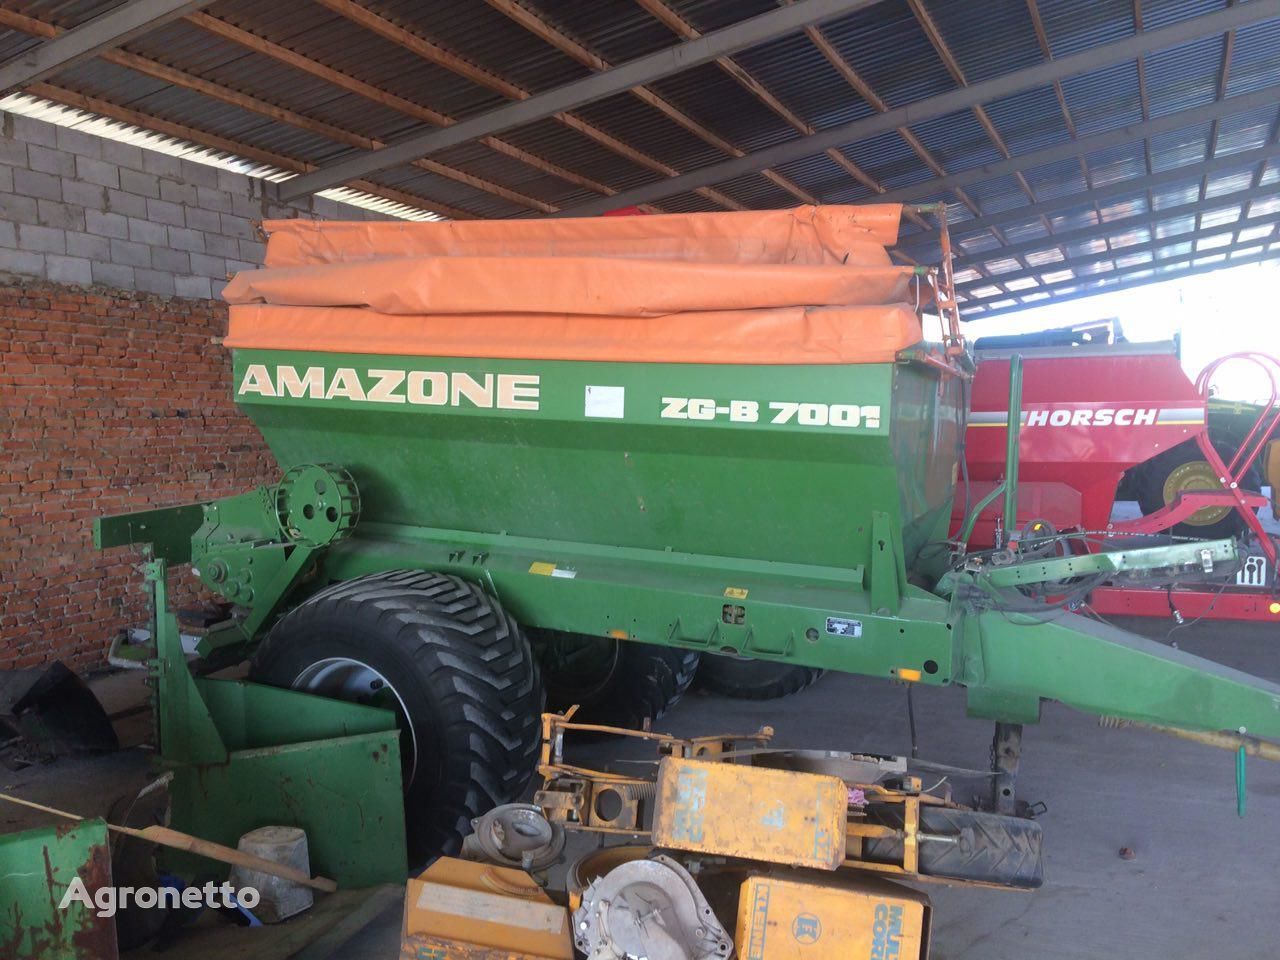 Amazone ZG-B 7001 trailed fertilizer spreader